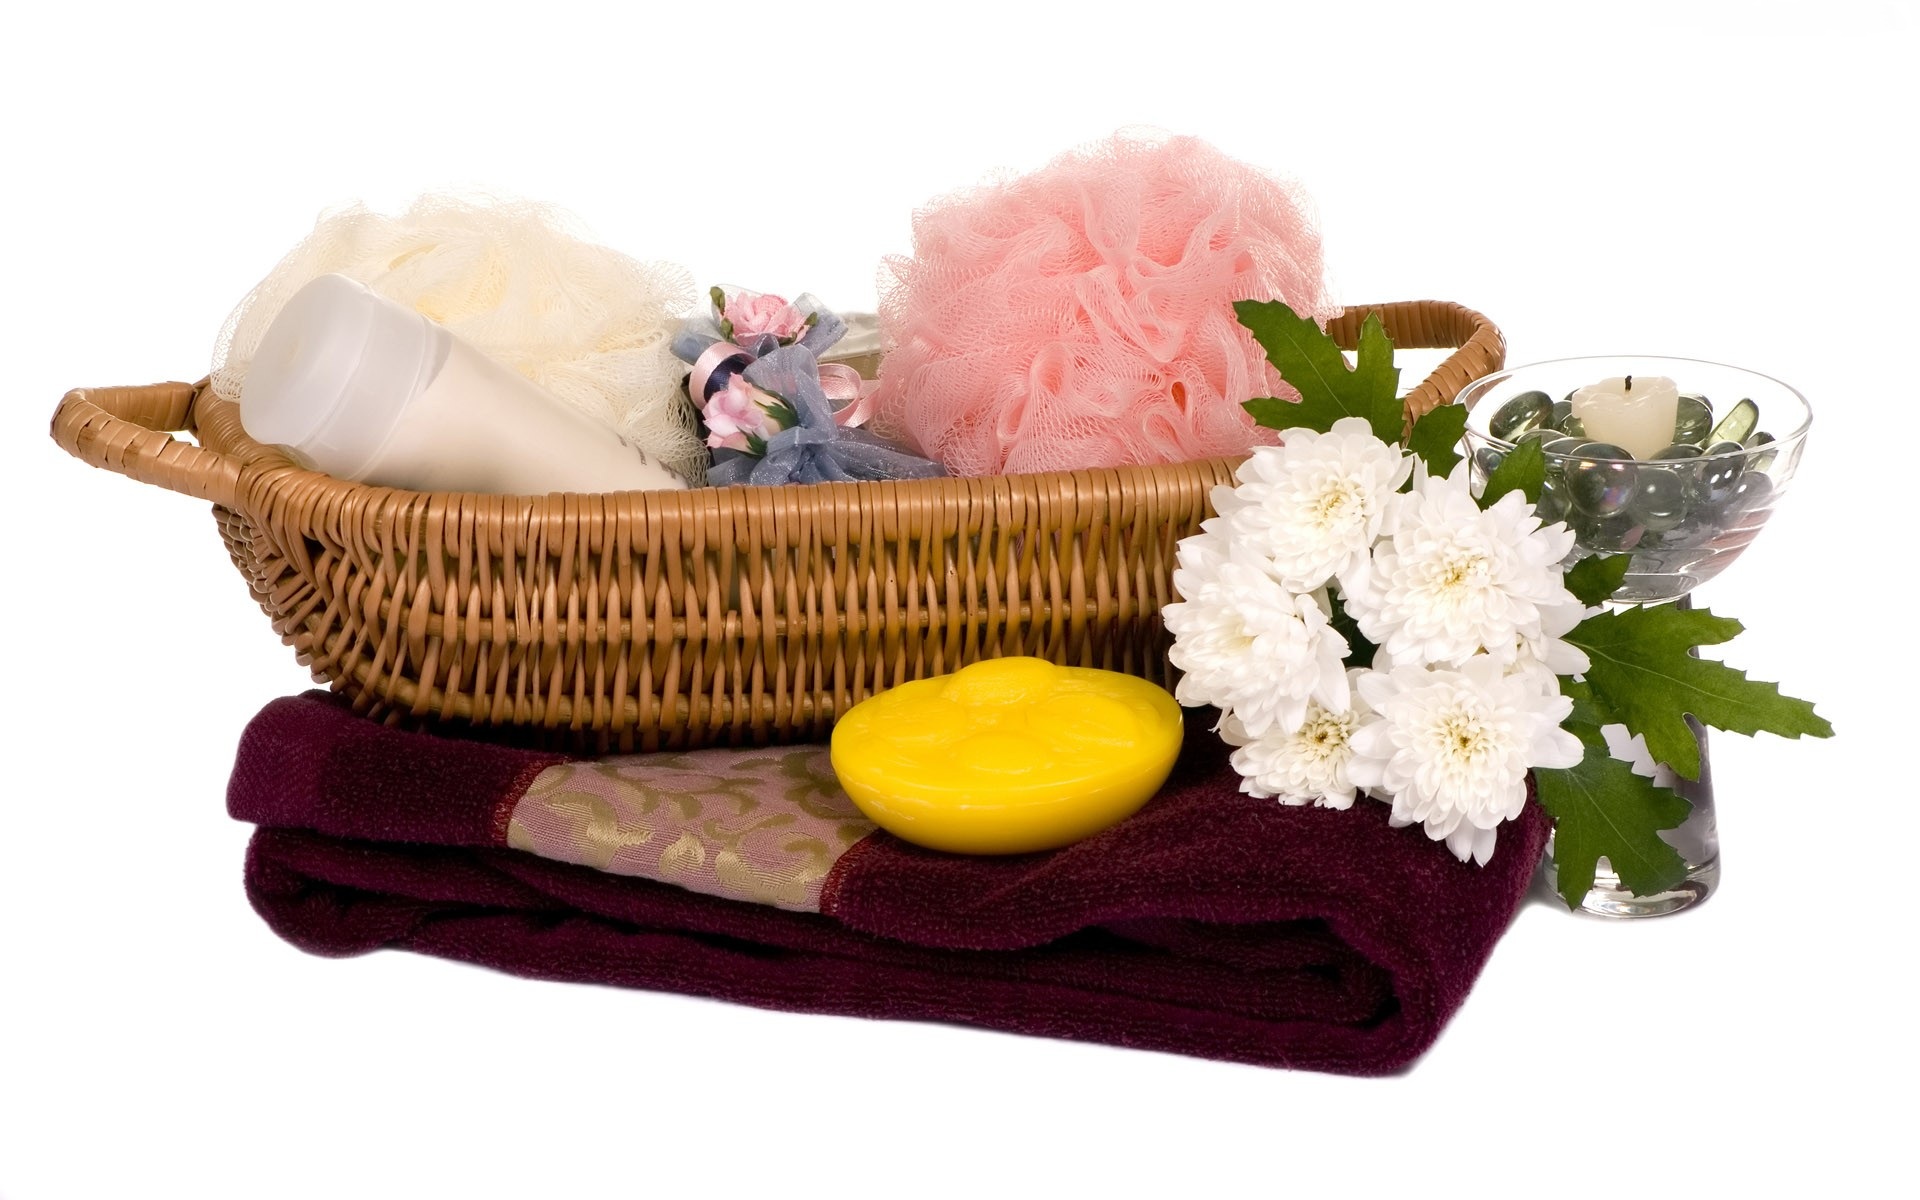 man made, spa, basket, flower, still life, towel